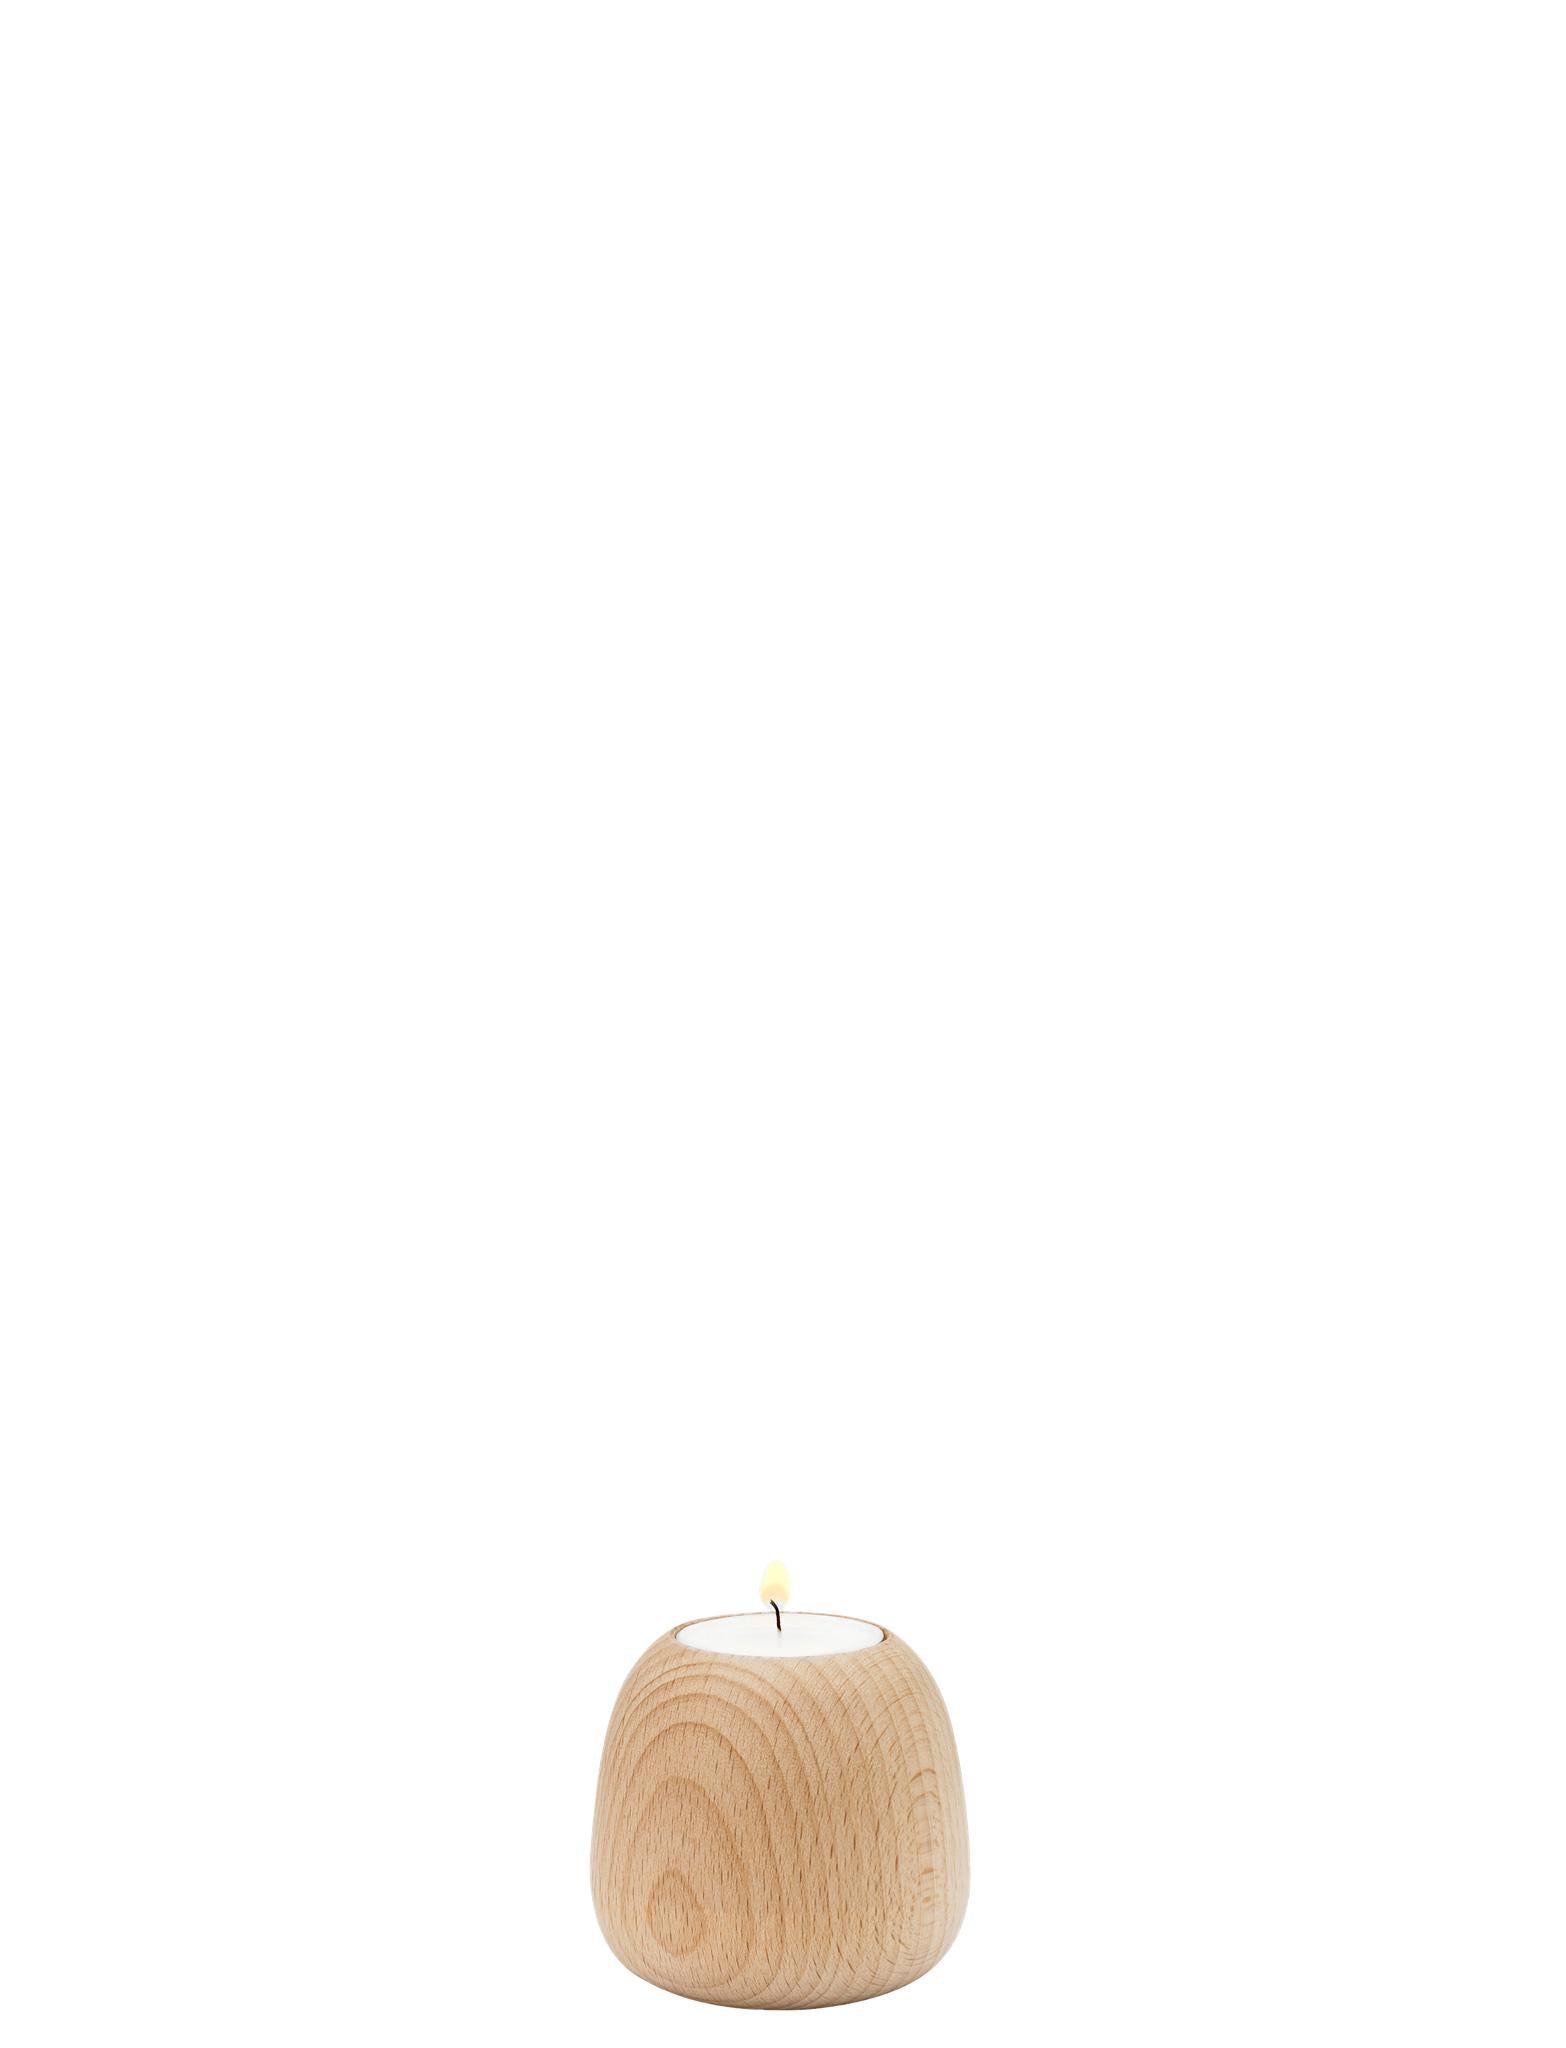 Stelton ORA Candlestick 6,5 cm, boksträd